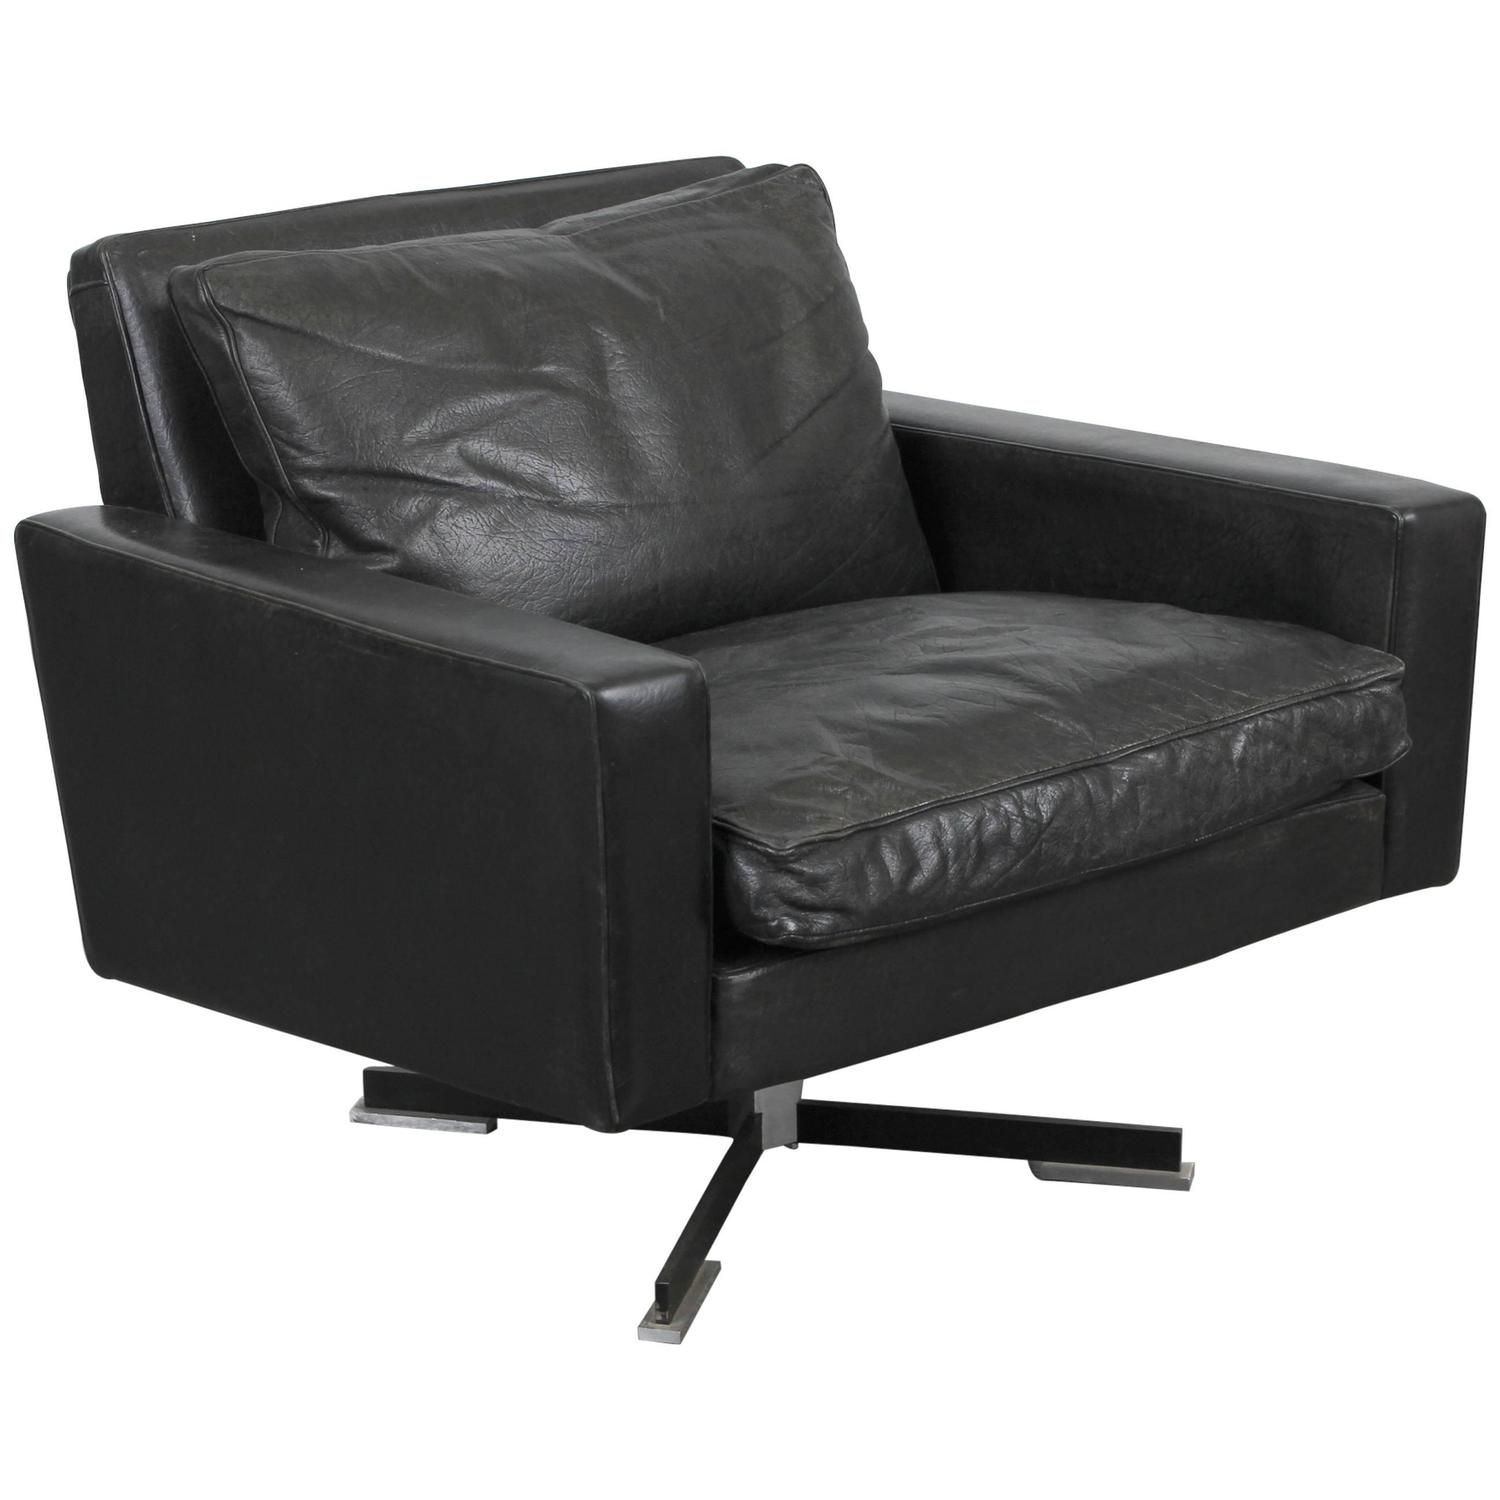 Mid Century Modern Black Leather Swivel Chair At 1Stdibs Within Leather Black Swivel Chairs (View 5 of 20)